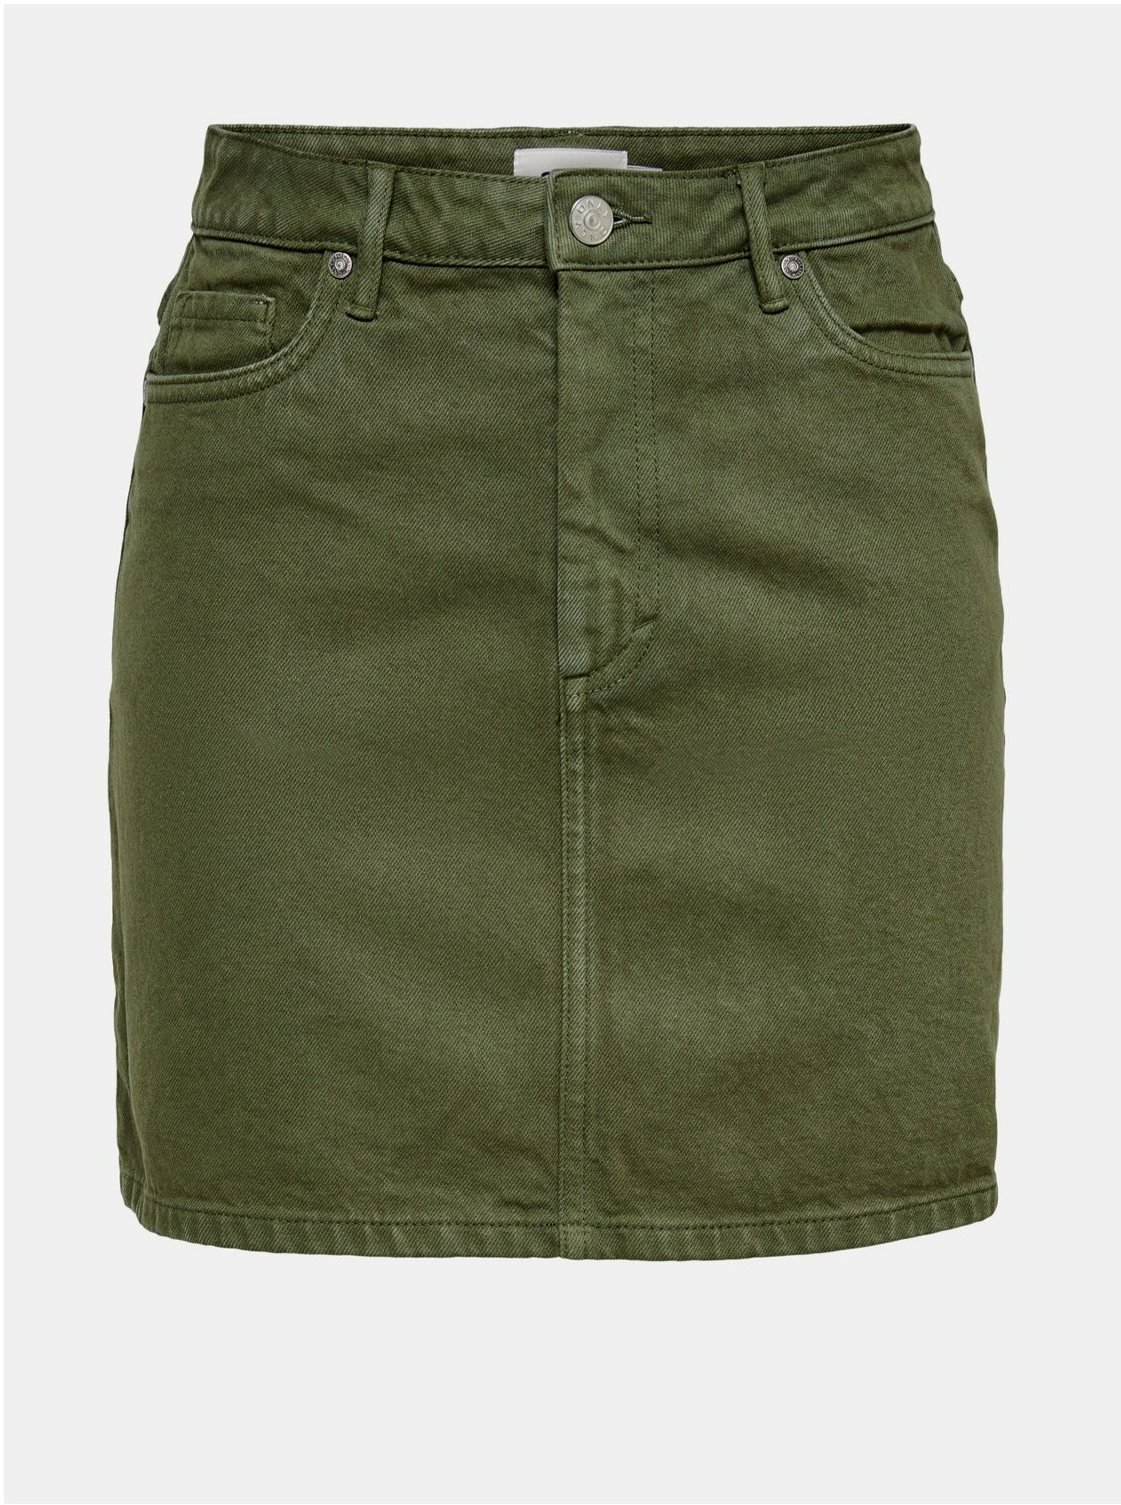 Falls Creek Women's Khaki Green Denim Skirt Plus Size 20 | eBay